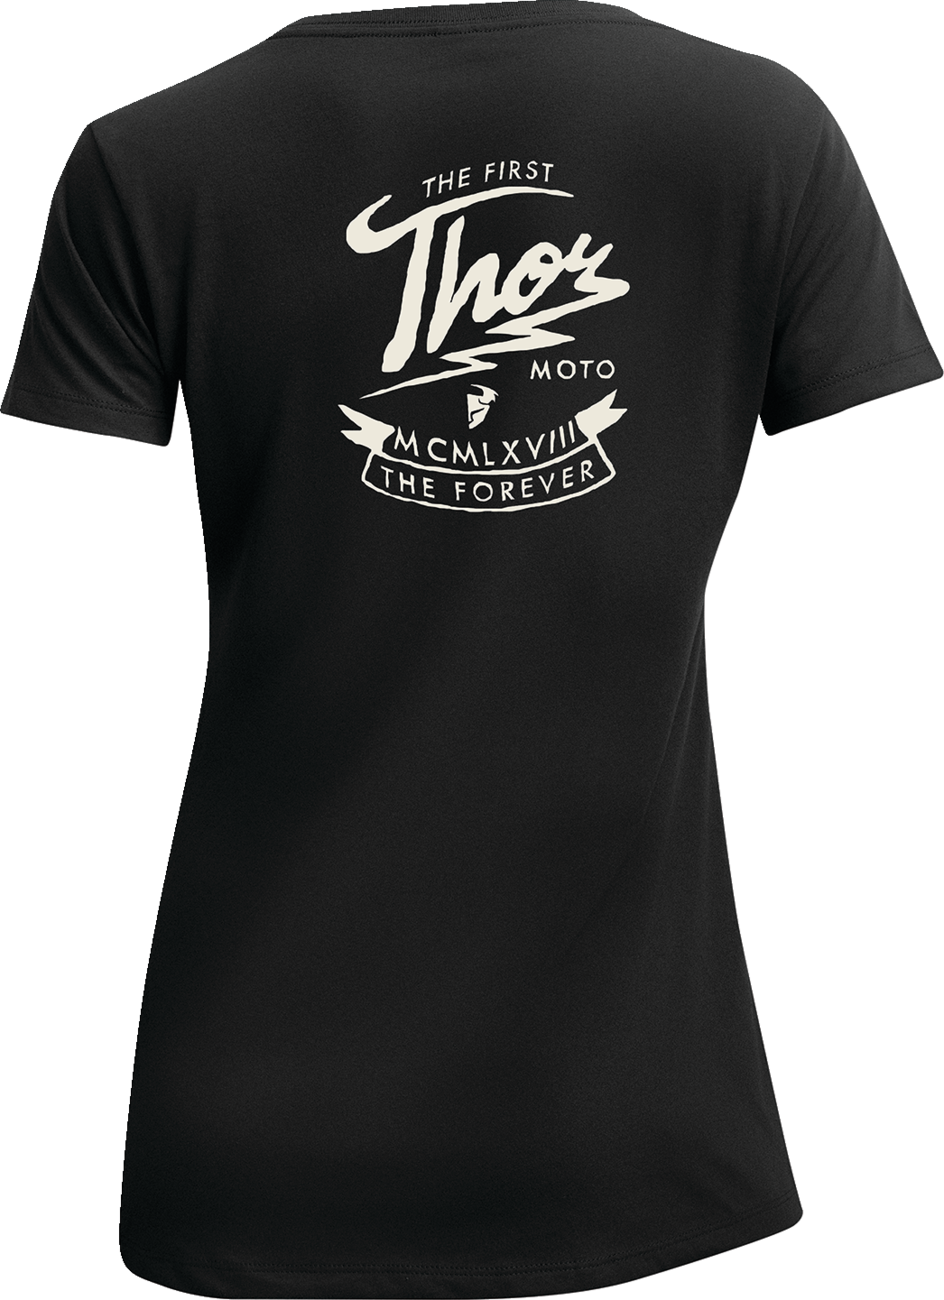 THOR Women's Thunder T-Shirt - Black - Medium 3031-4115